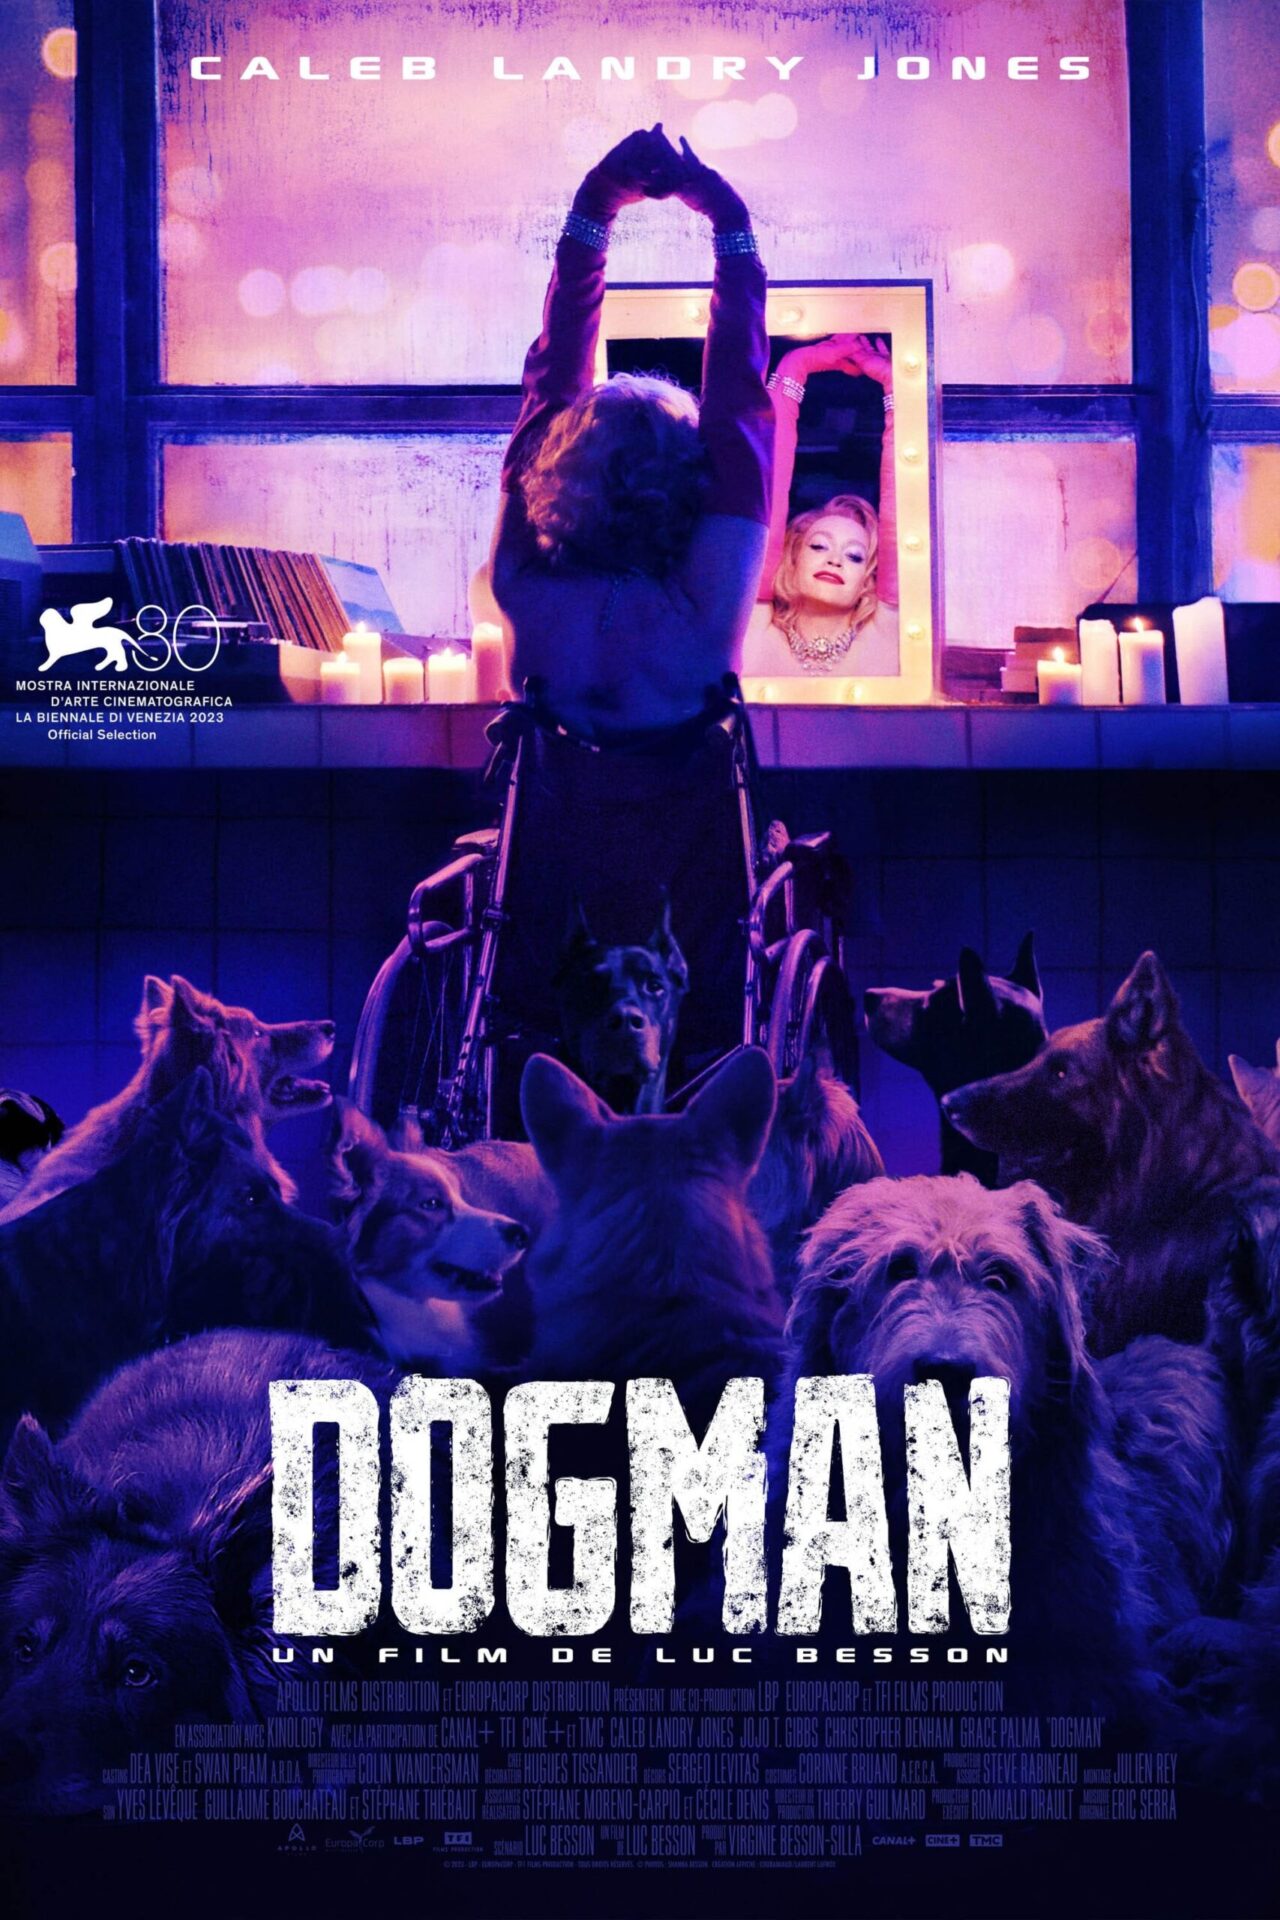 DogMan Poster